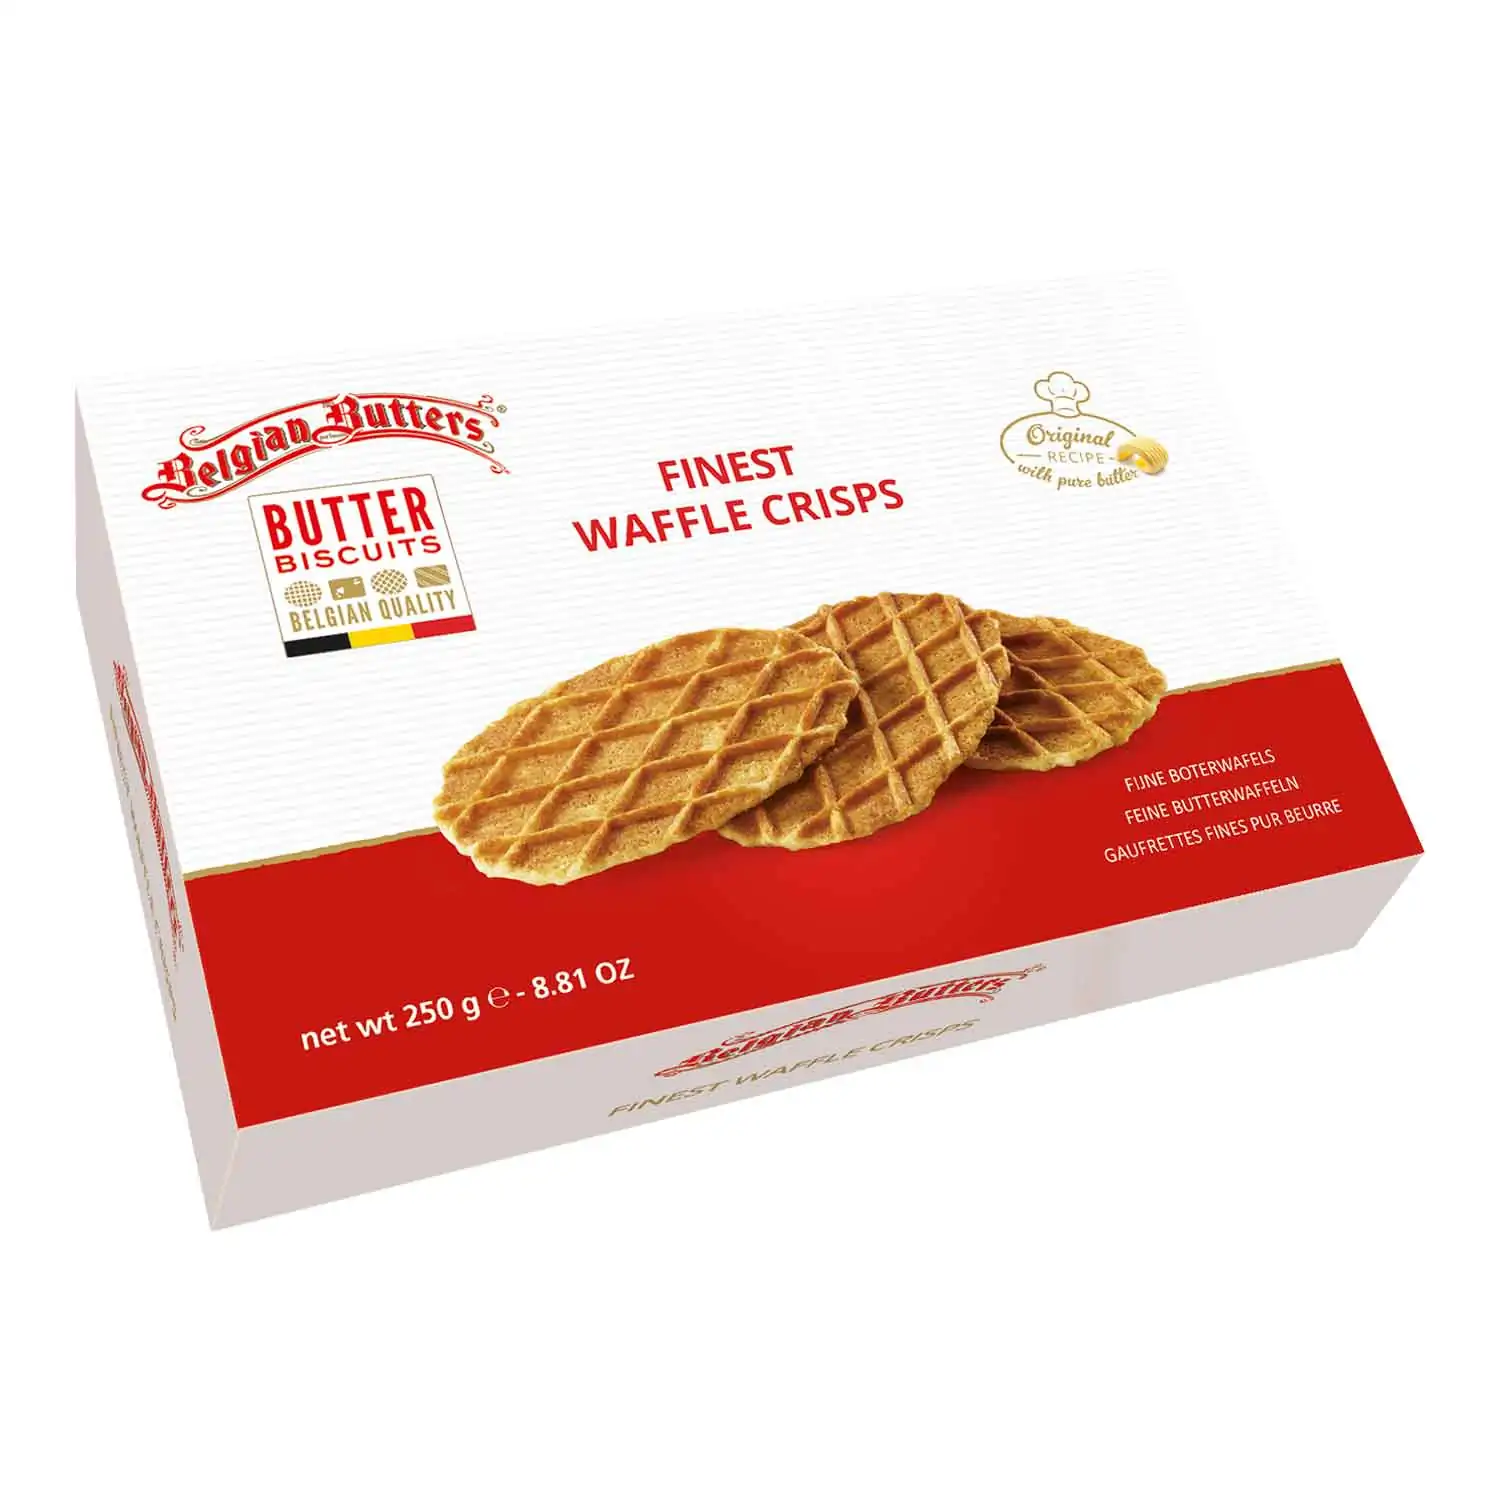 BB finest waffle crisps 250g